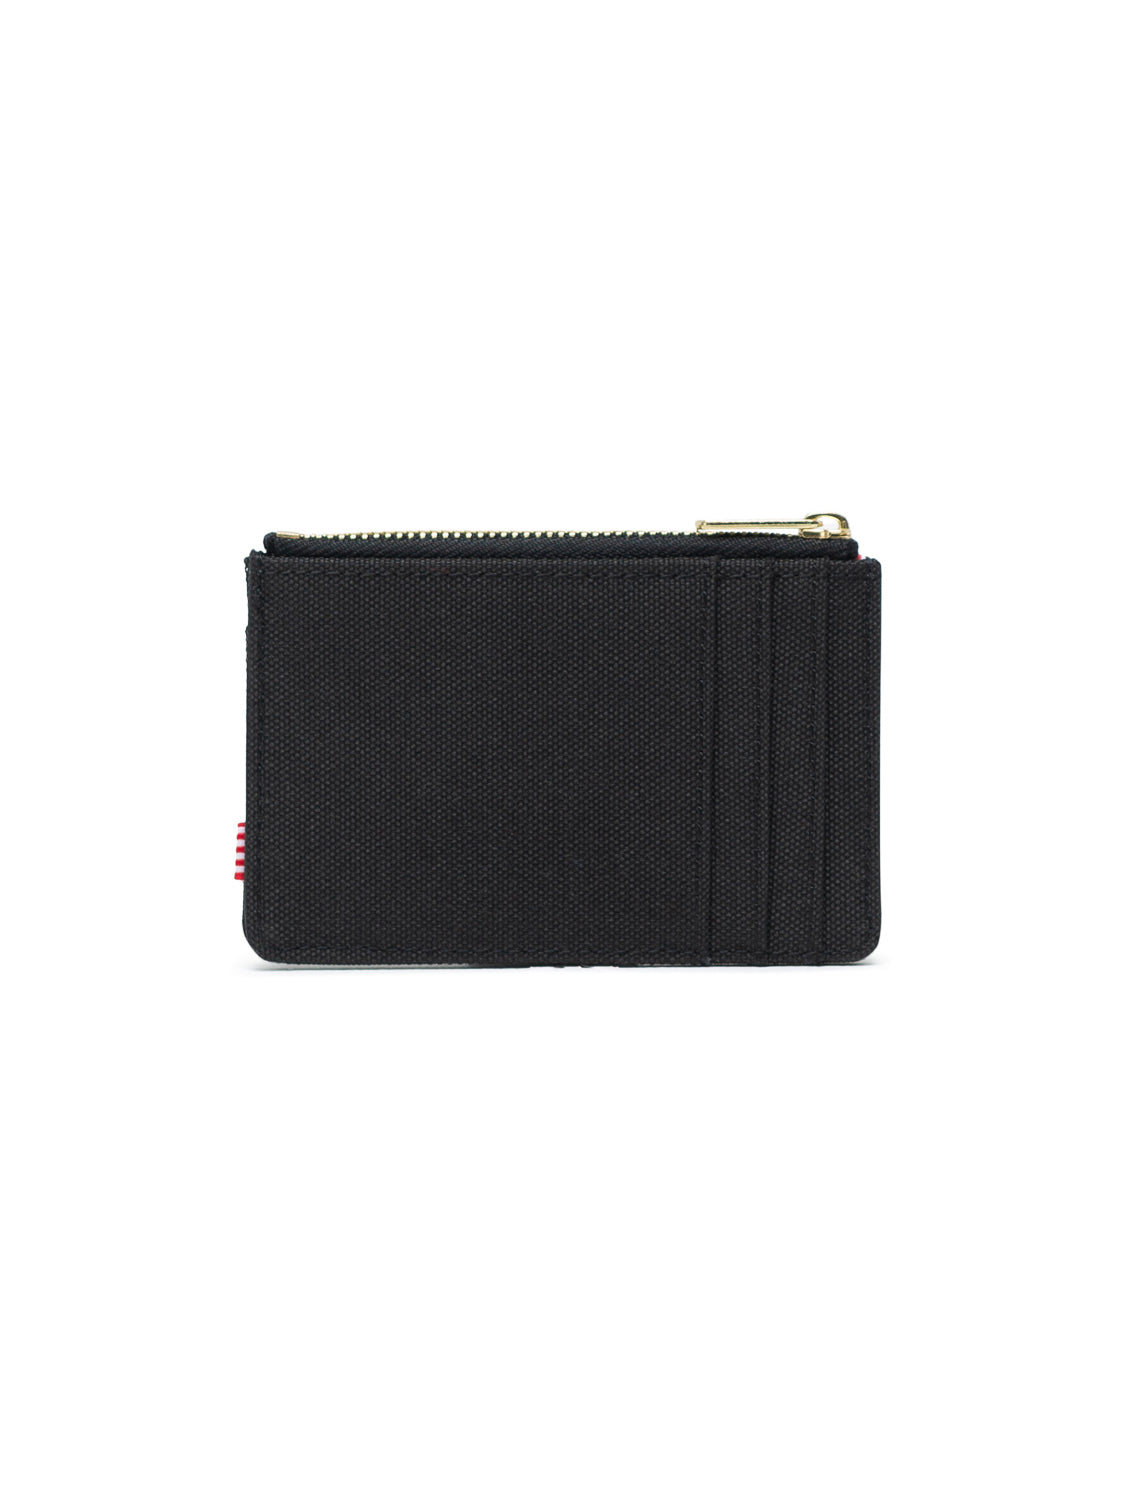 Herschel Oscar Compact Wallet